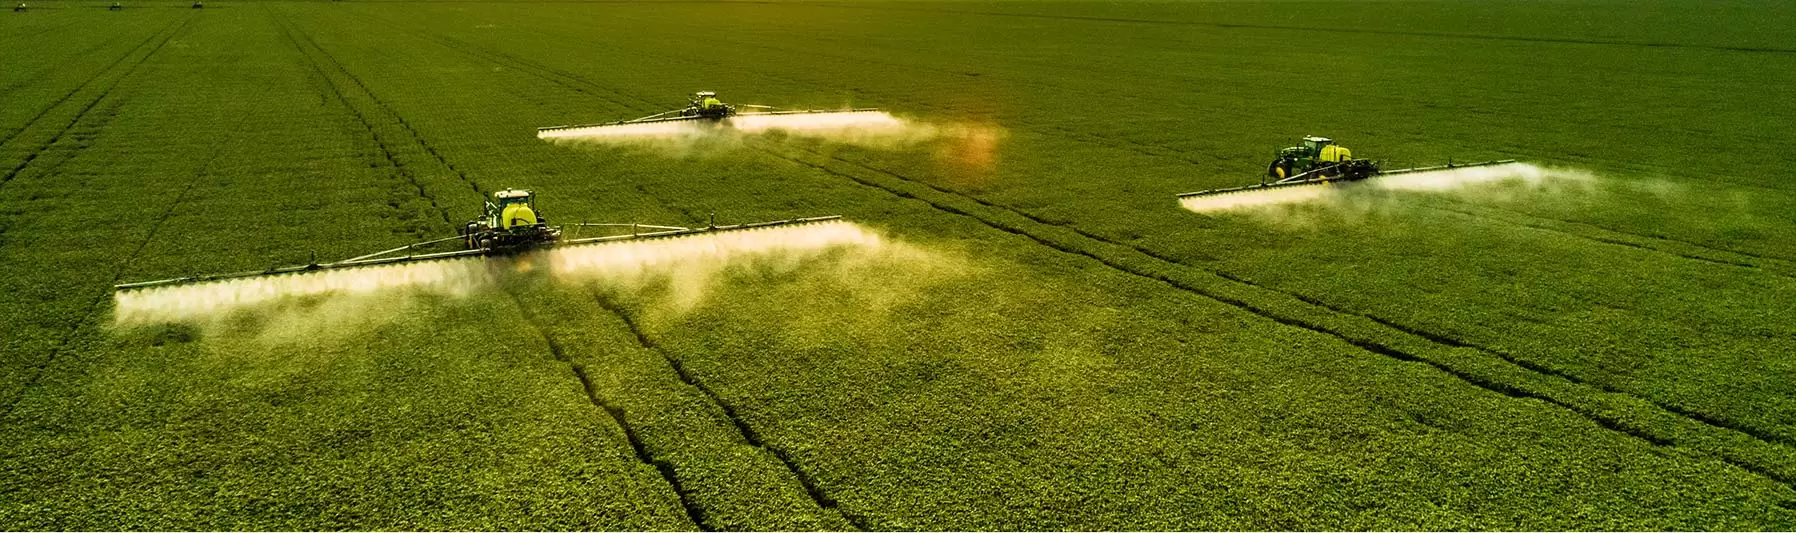 tractor harvesting crops